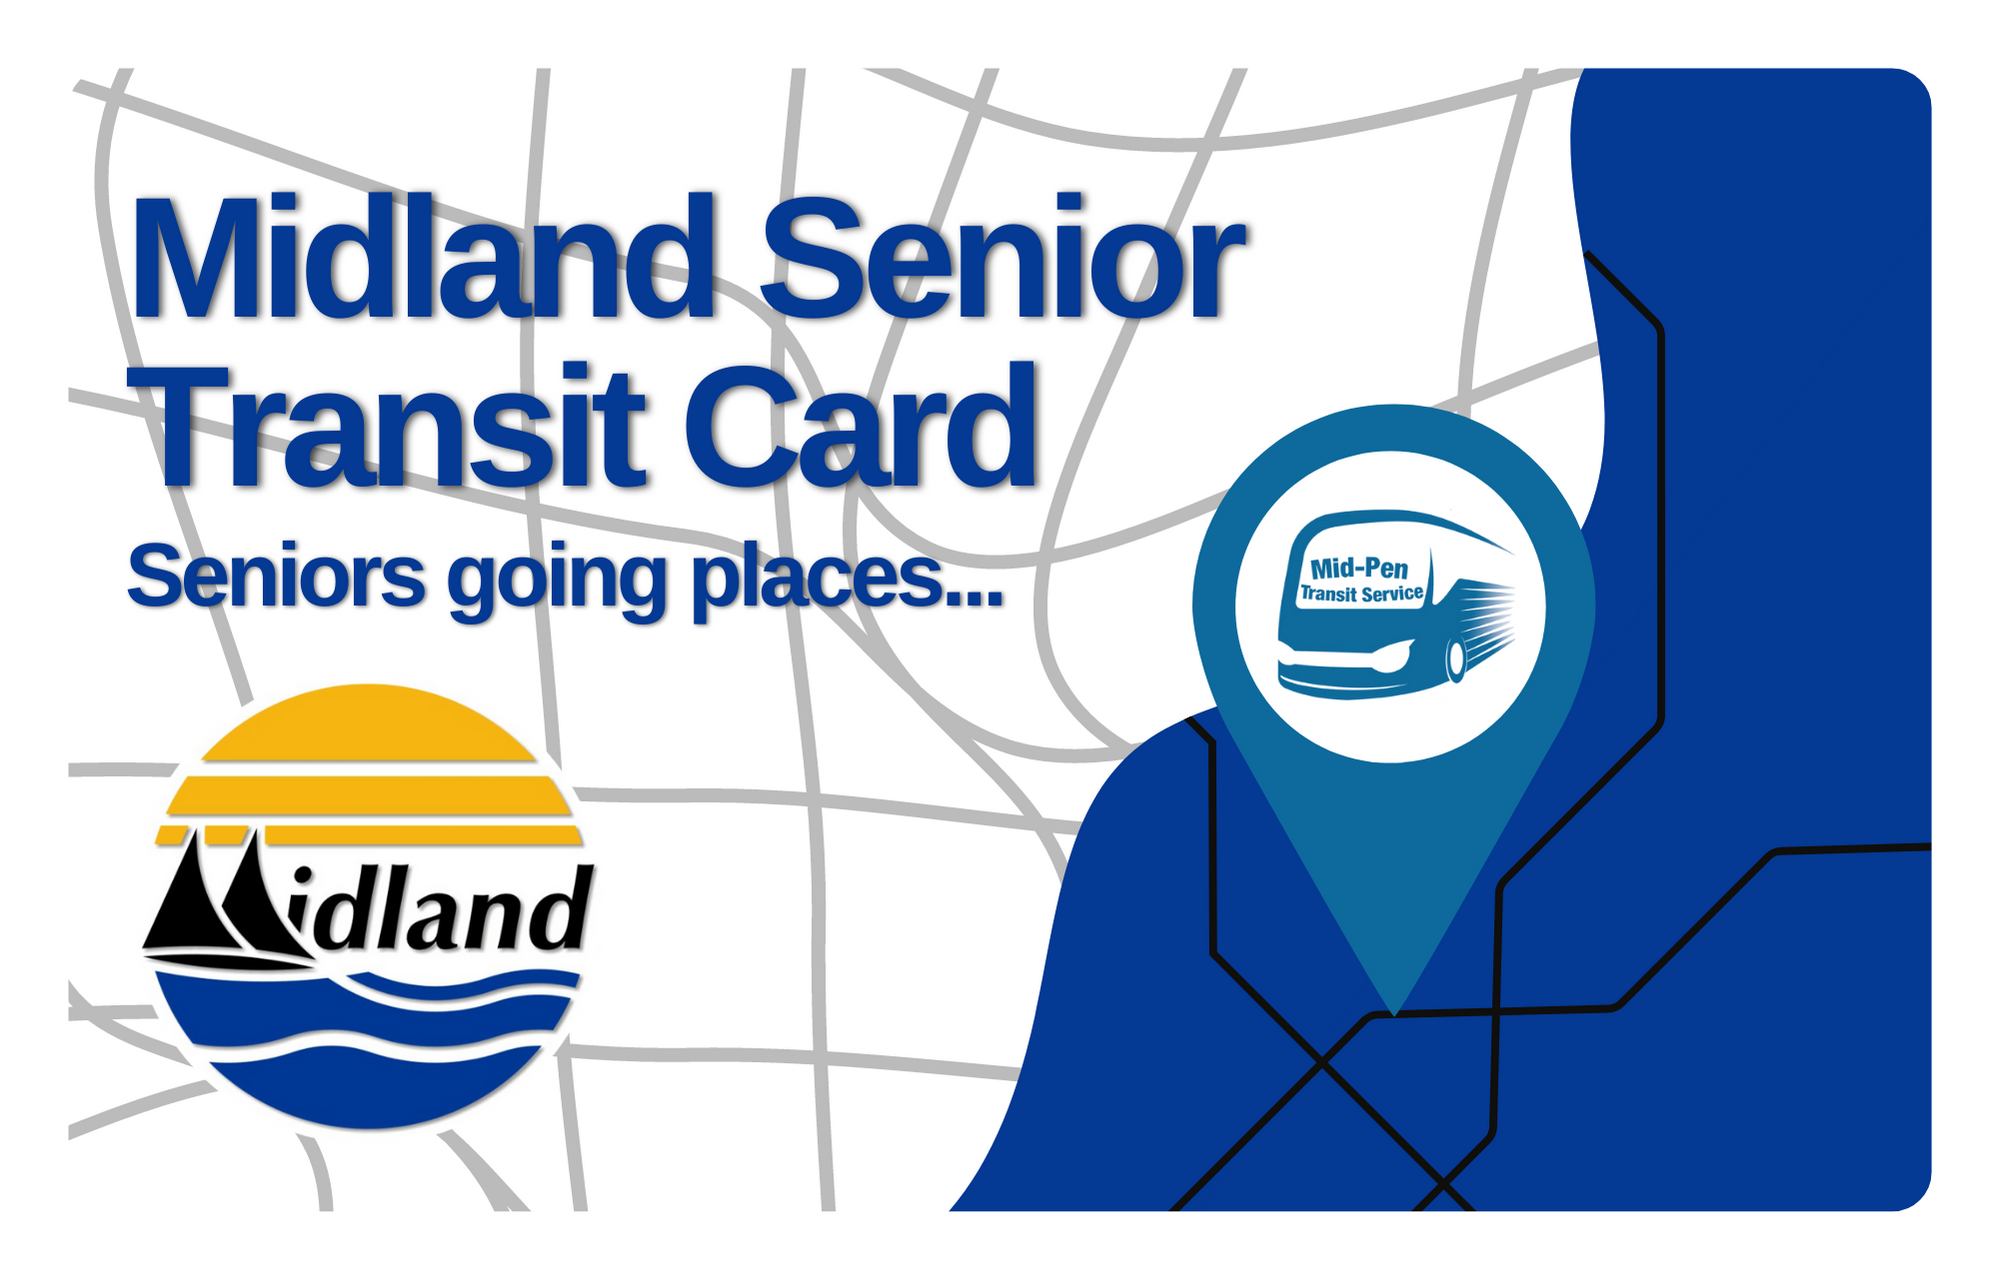 Midland Senior Transit Card